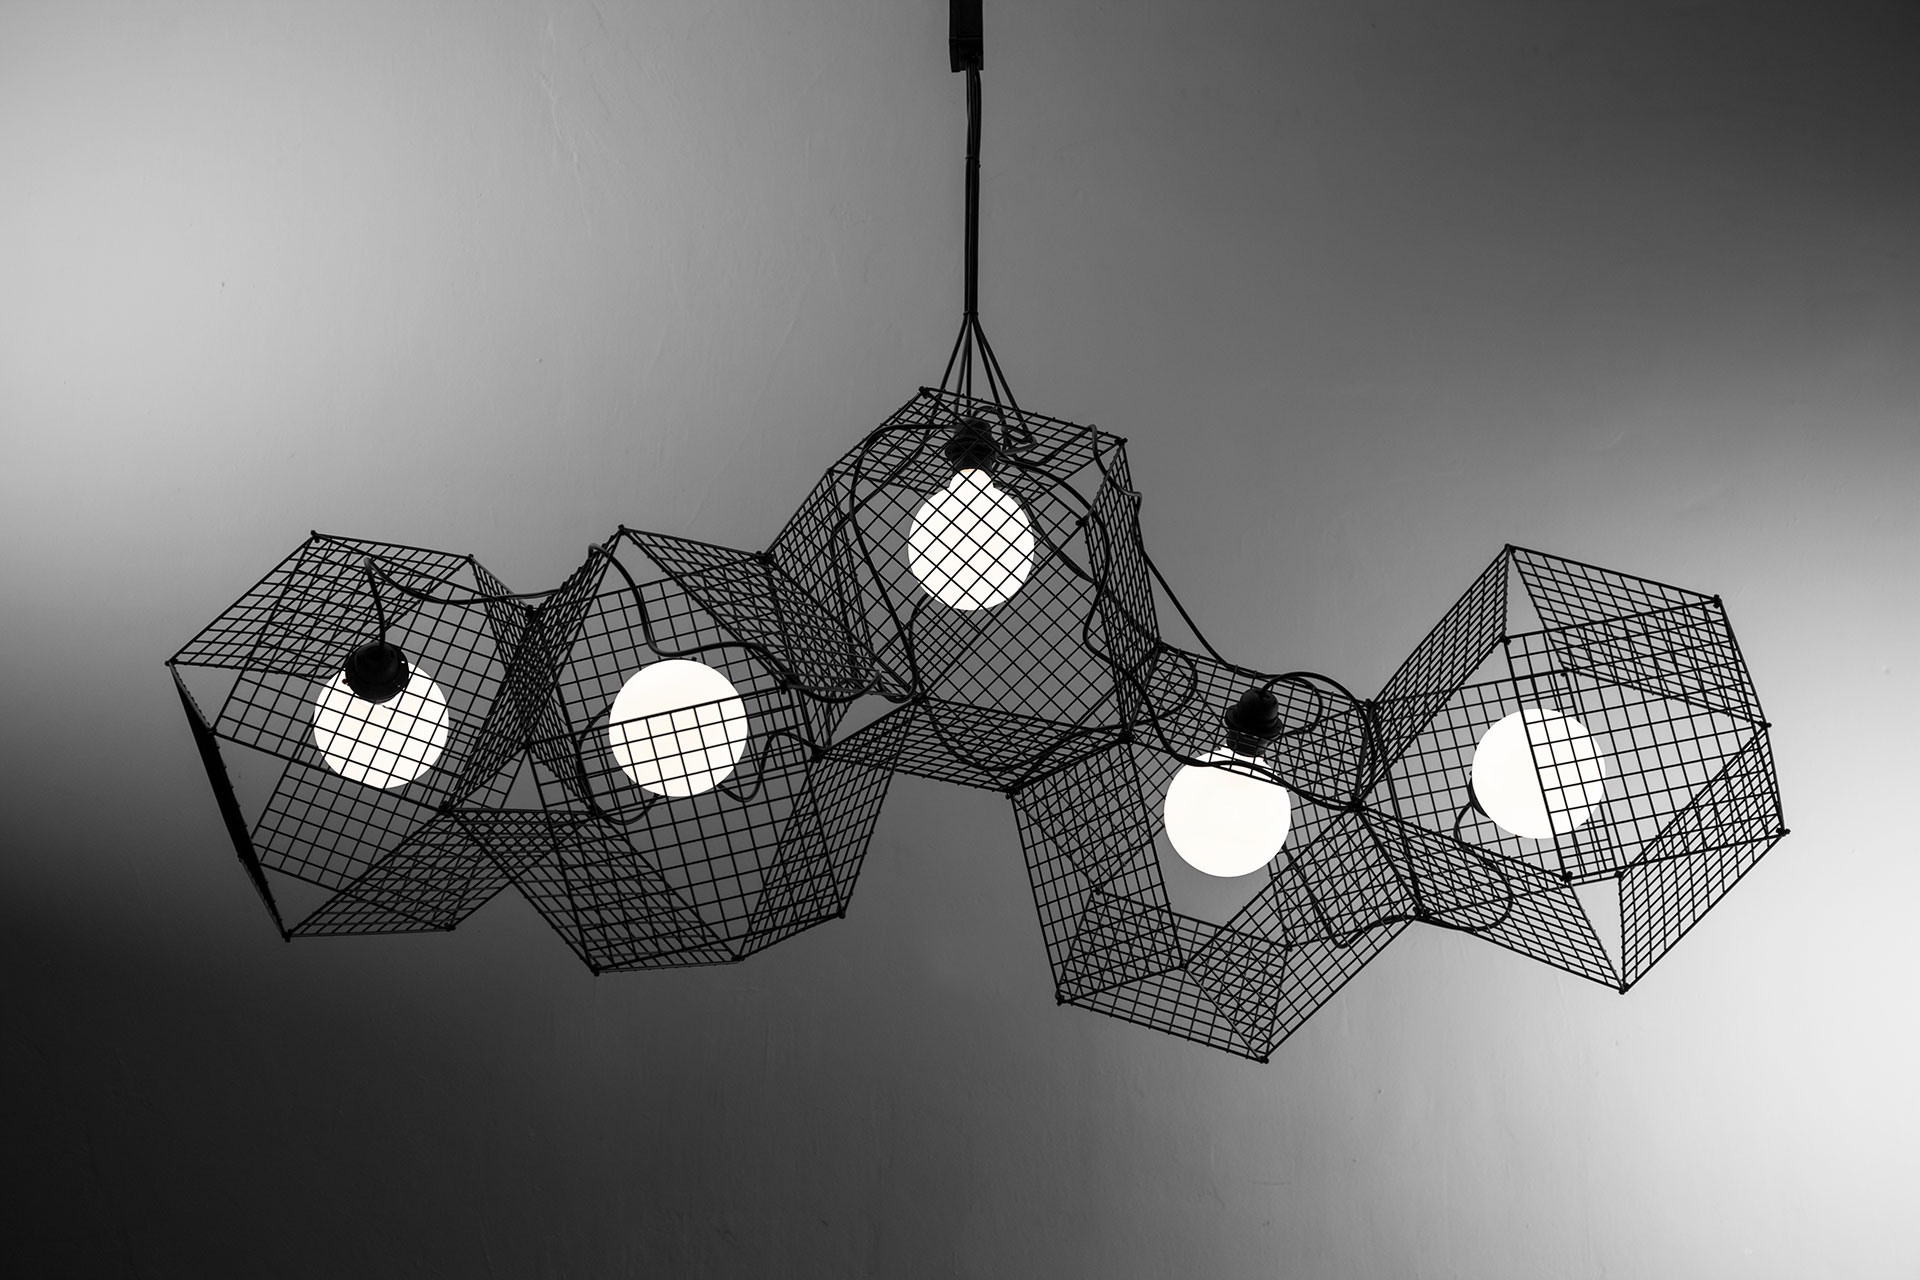 Large designer lighting chandelier in black metal inspired by geometric forms